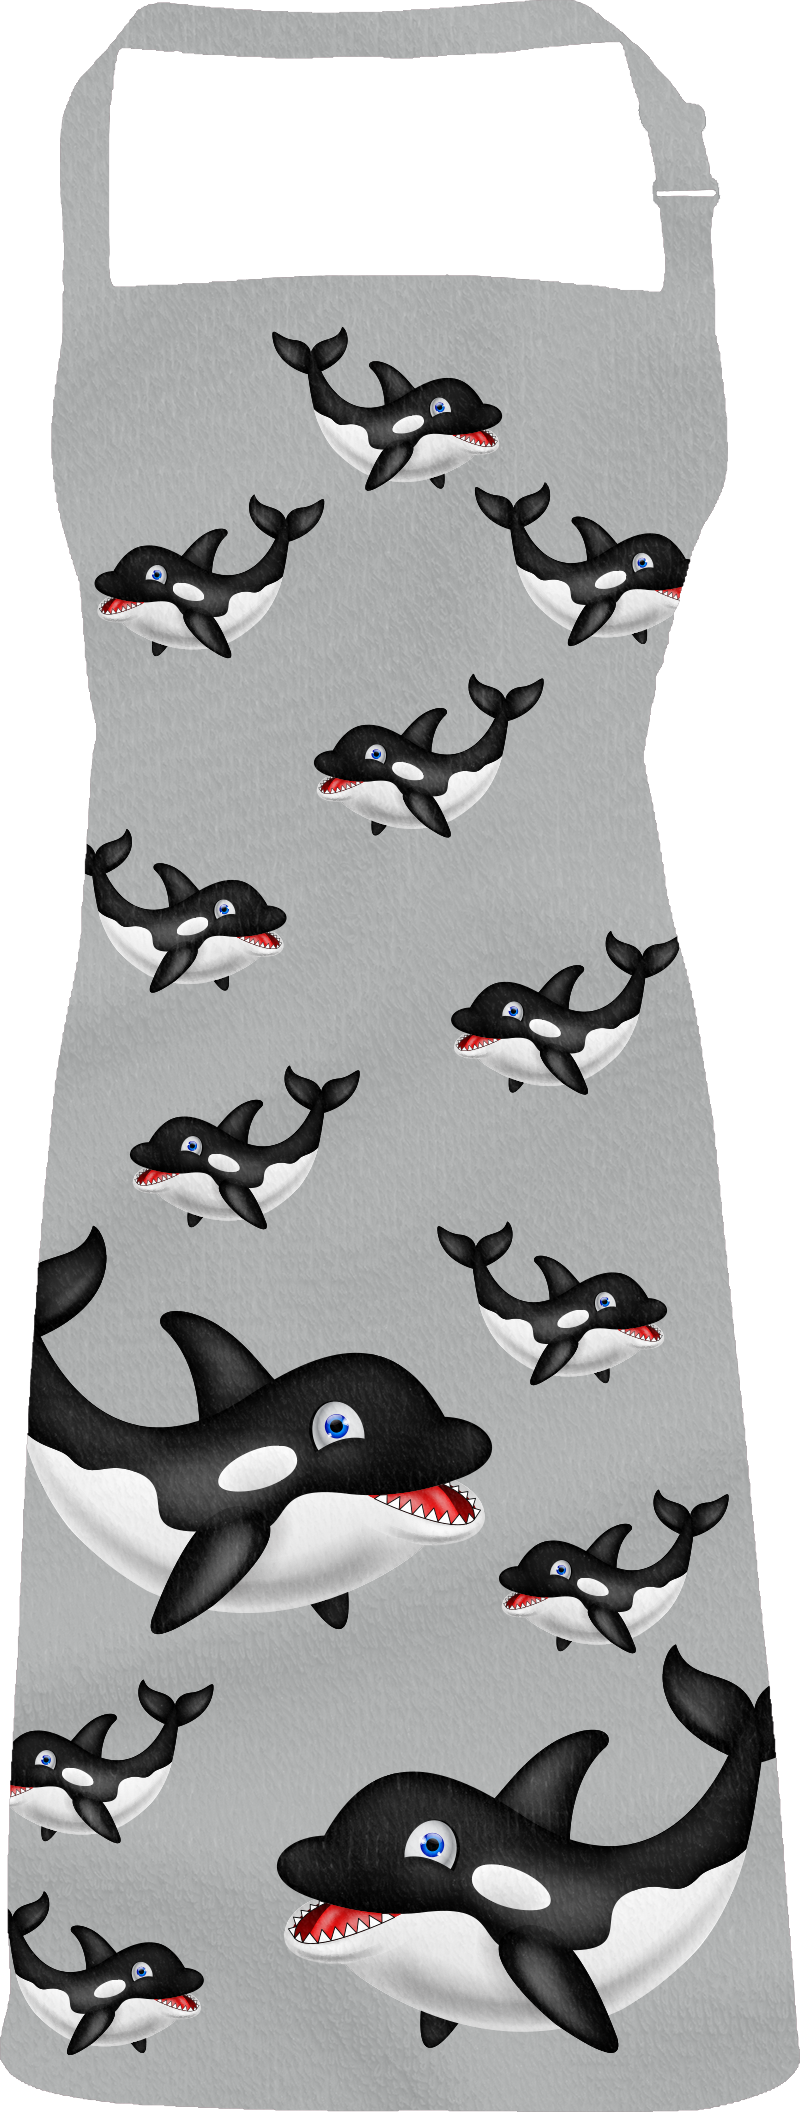 Orca Whale Apron